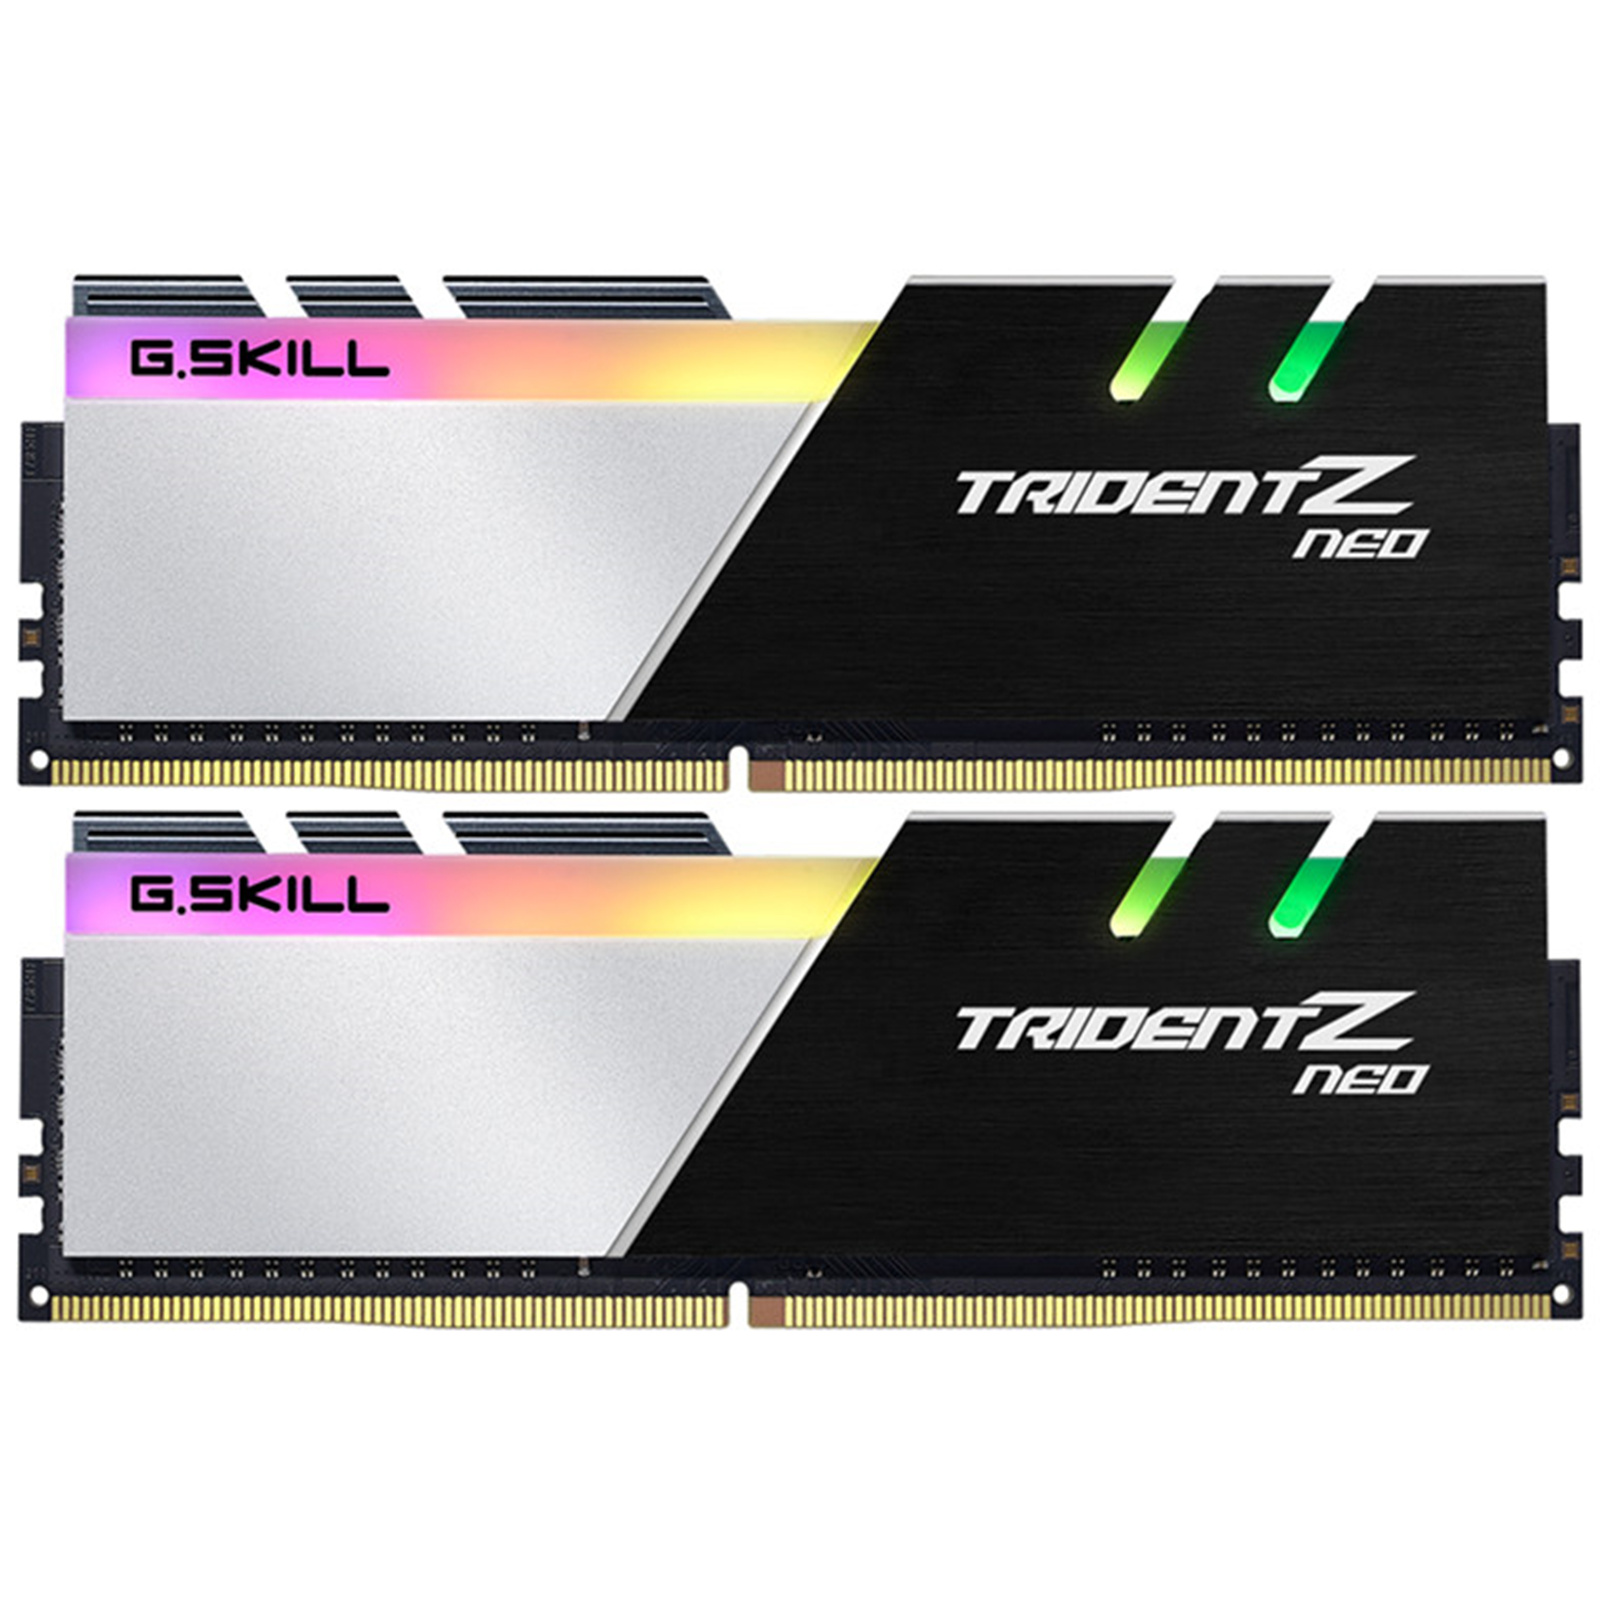 G.SKILL Trident Z Neo RGB F4-3200C16D-16GTZN 16 GB RAM (2X 8GB) DDR4  3200MHz, CL16 1.35V Desktop Memory, 16-18-18-38 Optimized For AMD Ryzen  CPUs and